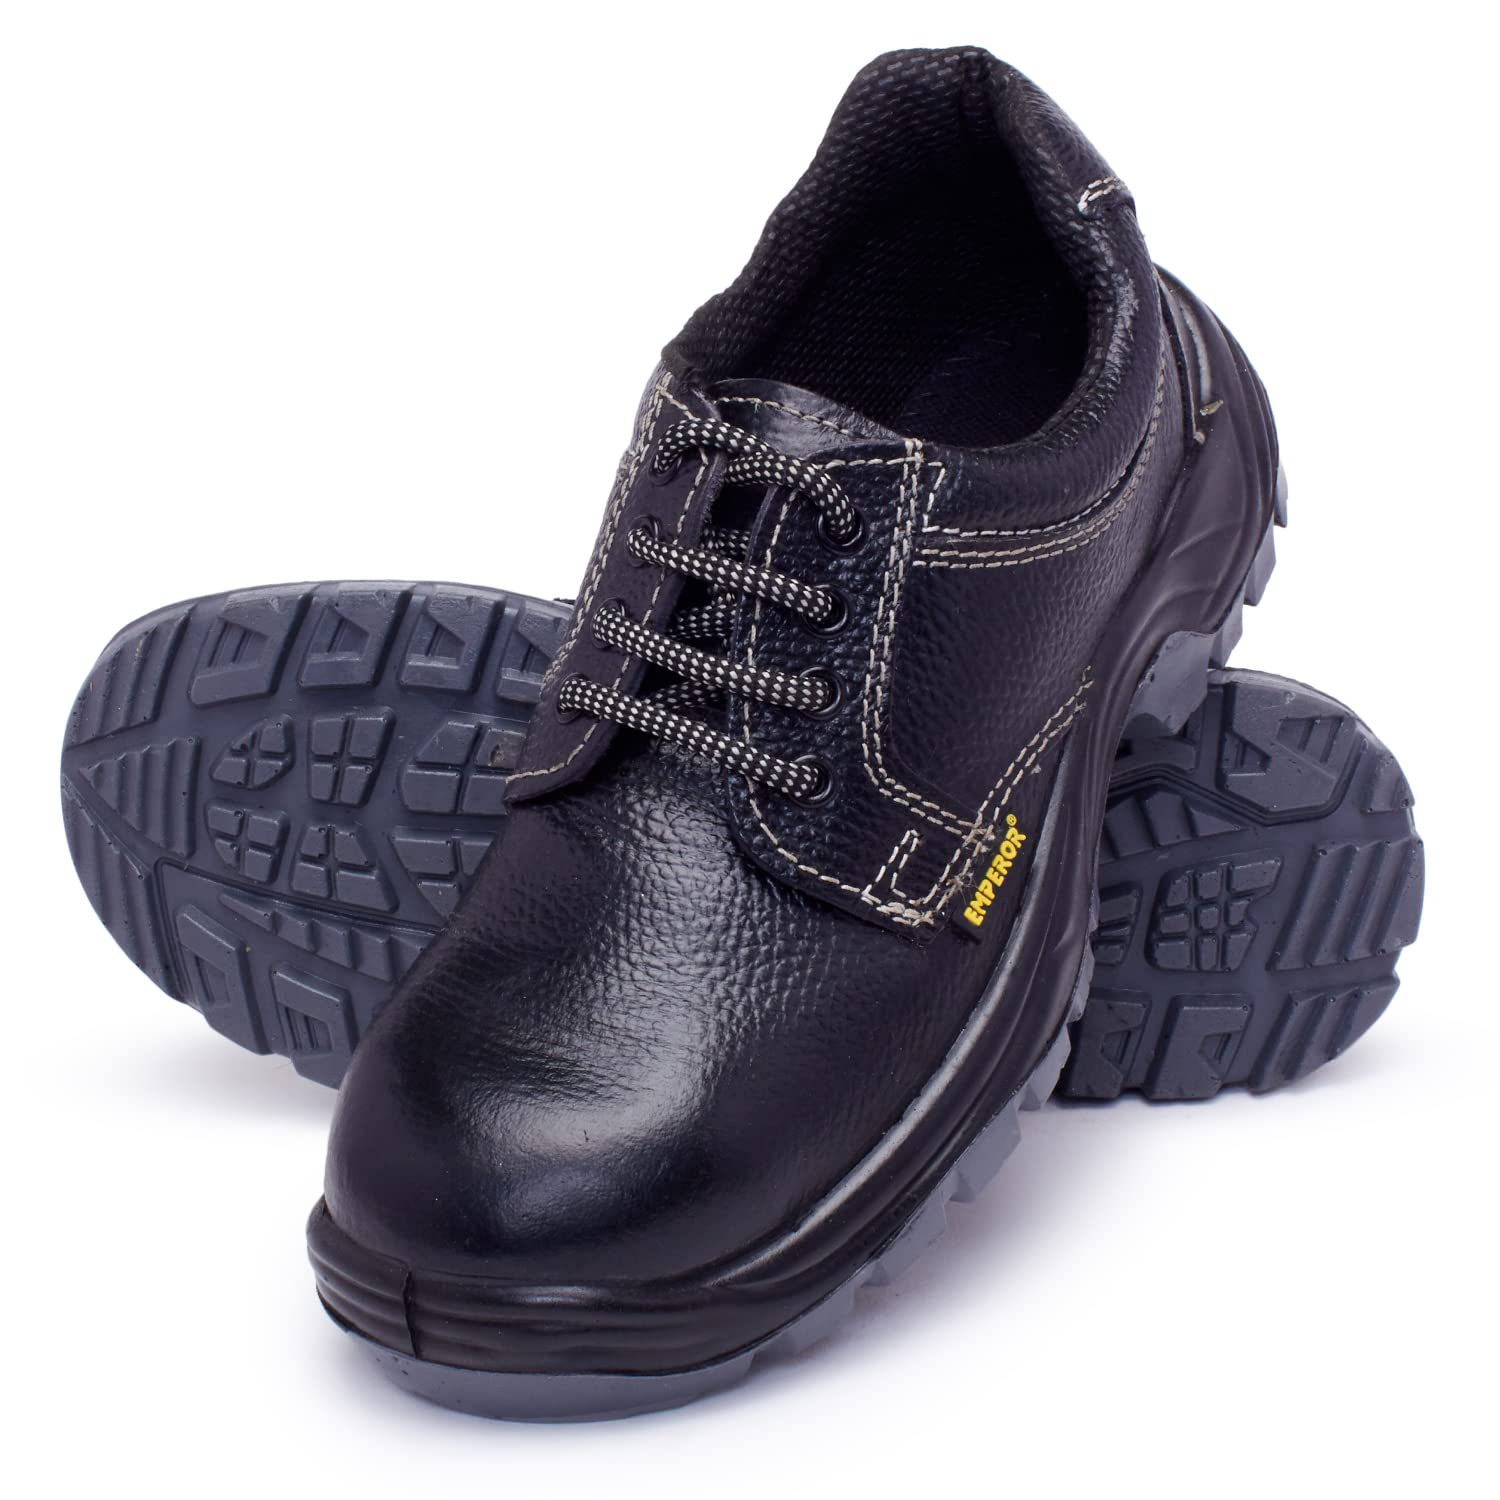 Emperor Steel Toe Leather Safety Shoe CZAR